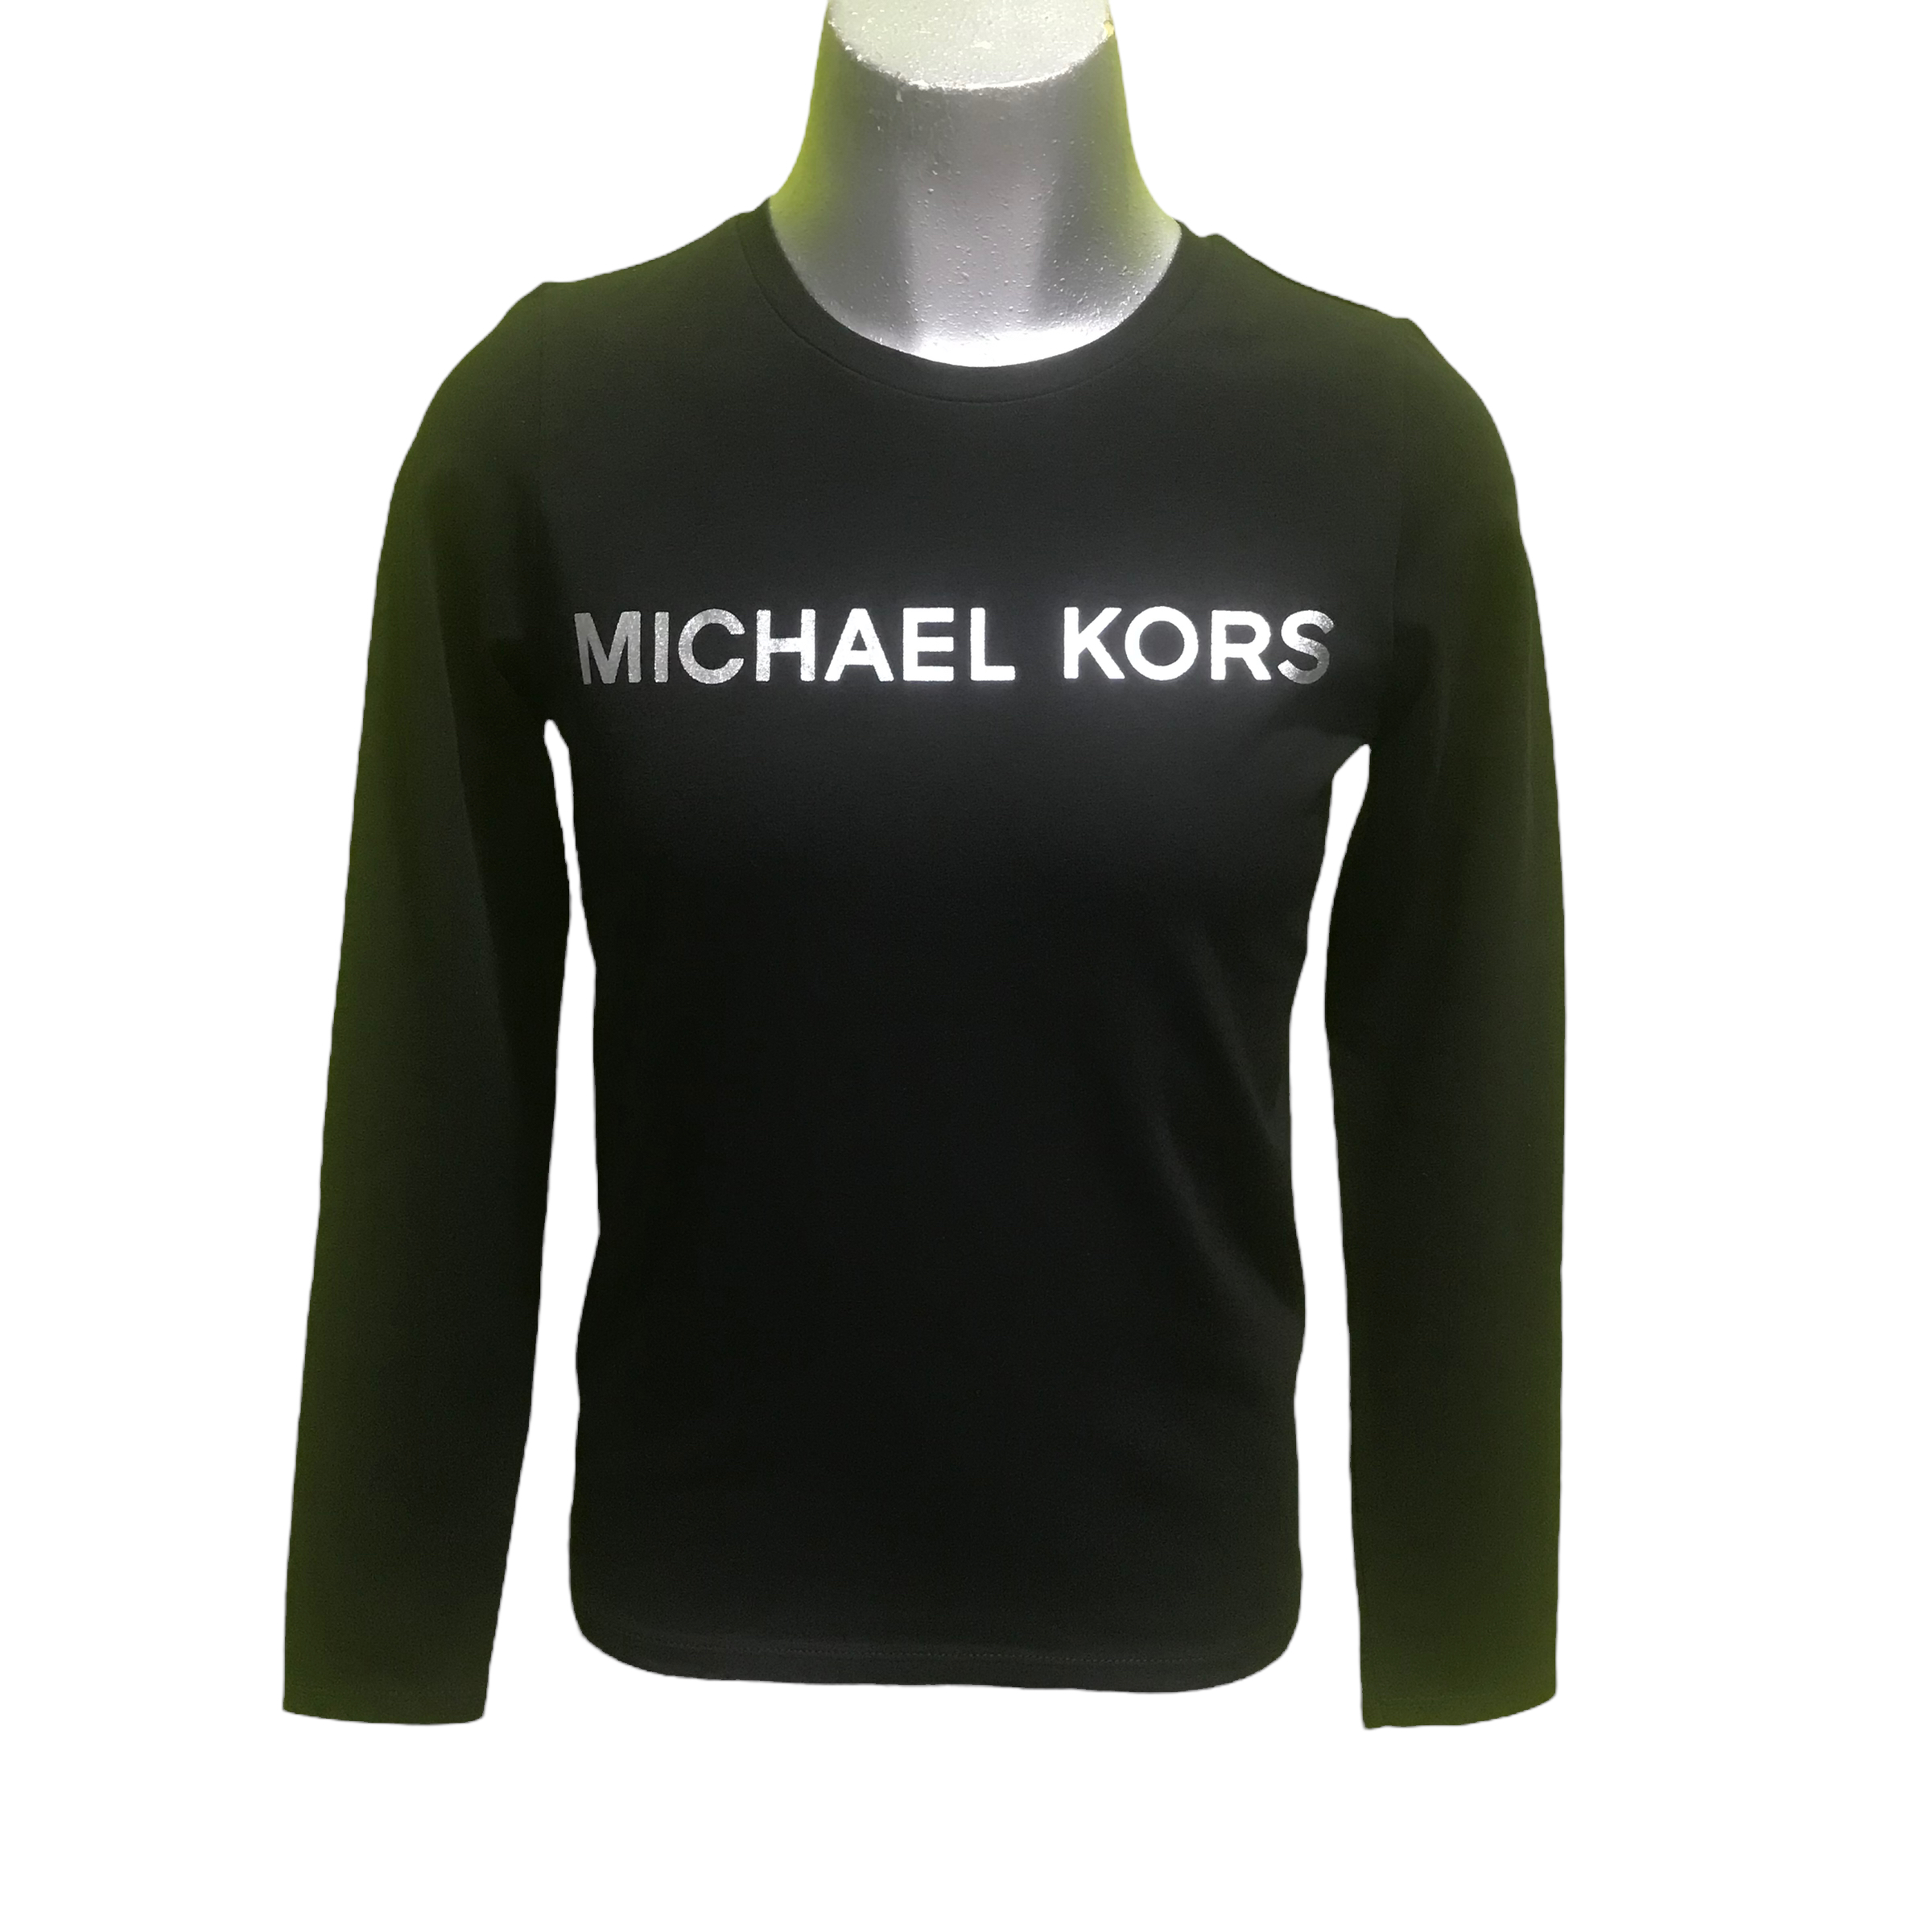 Michael Kors Camiseta negra letras plateadas